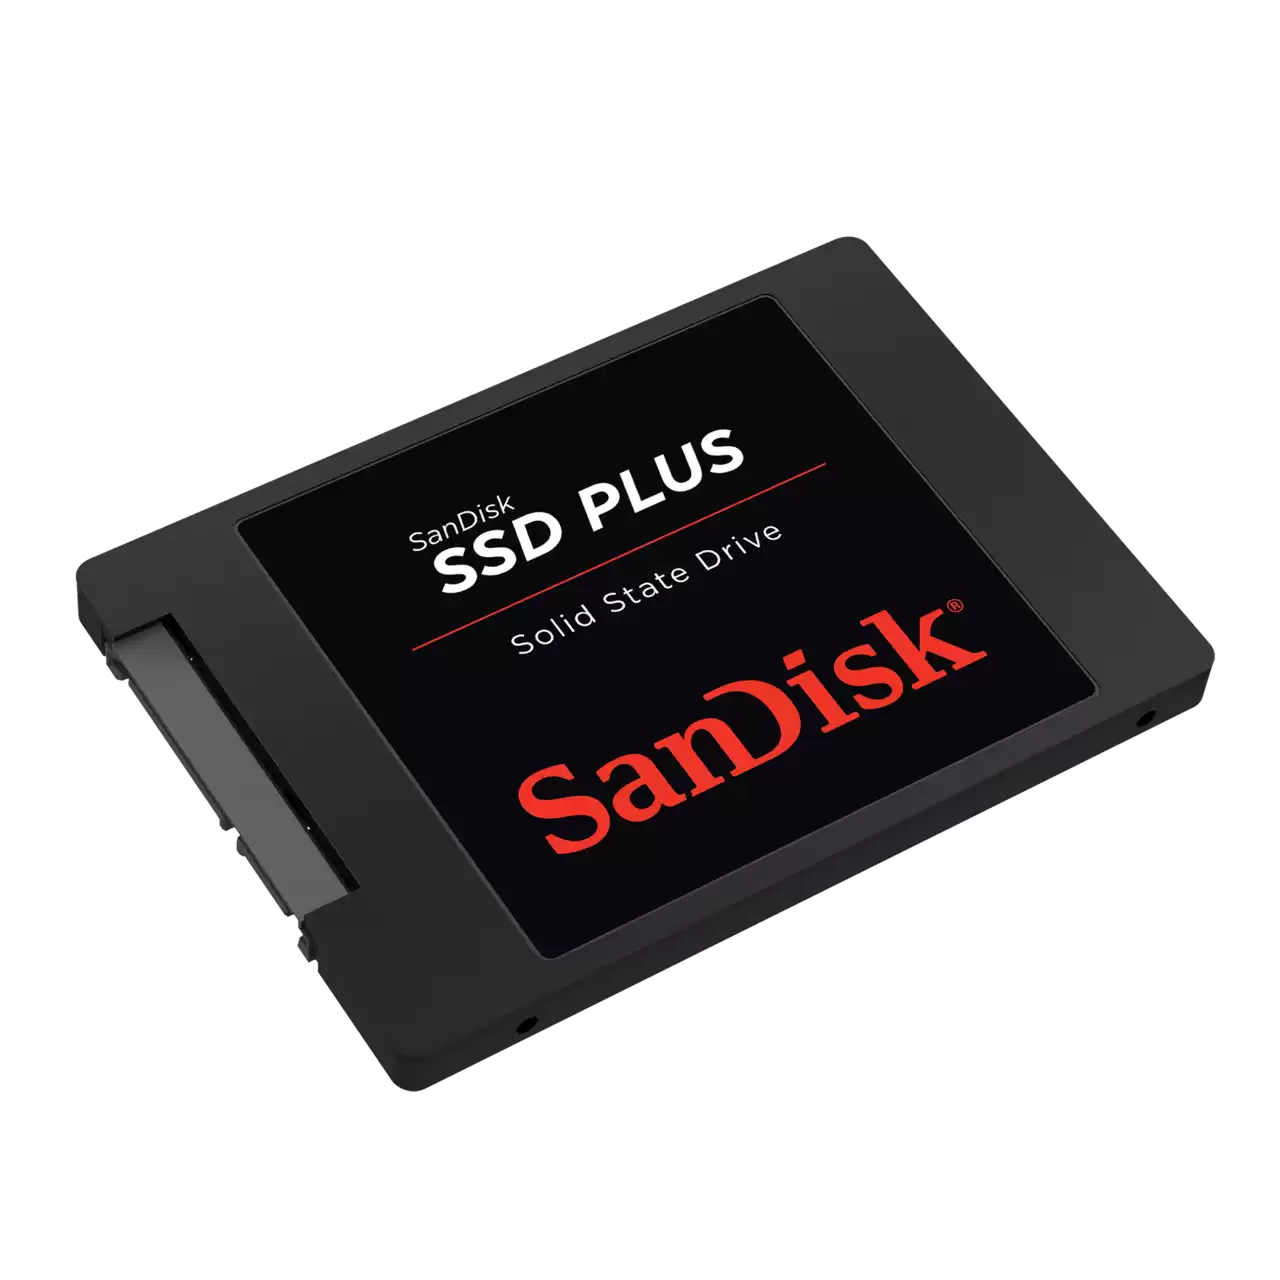 SanDisk 240GB SSD Plus 2.5